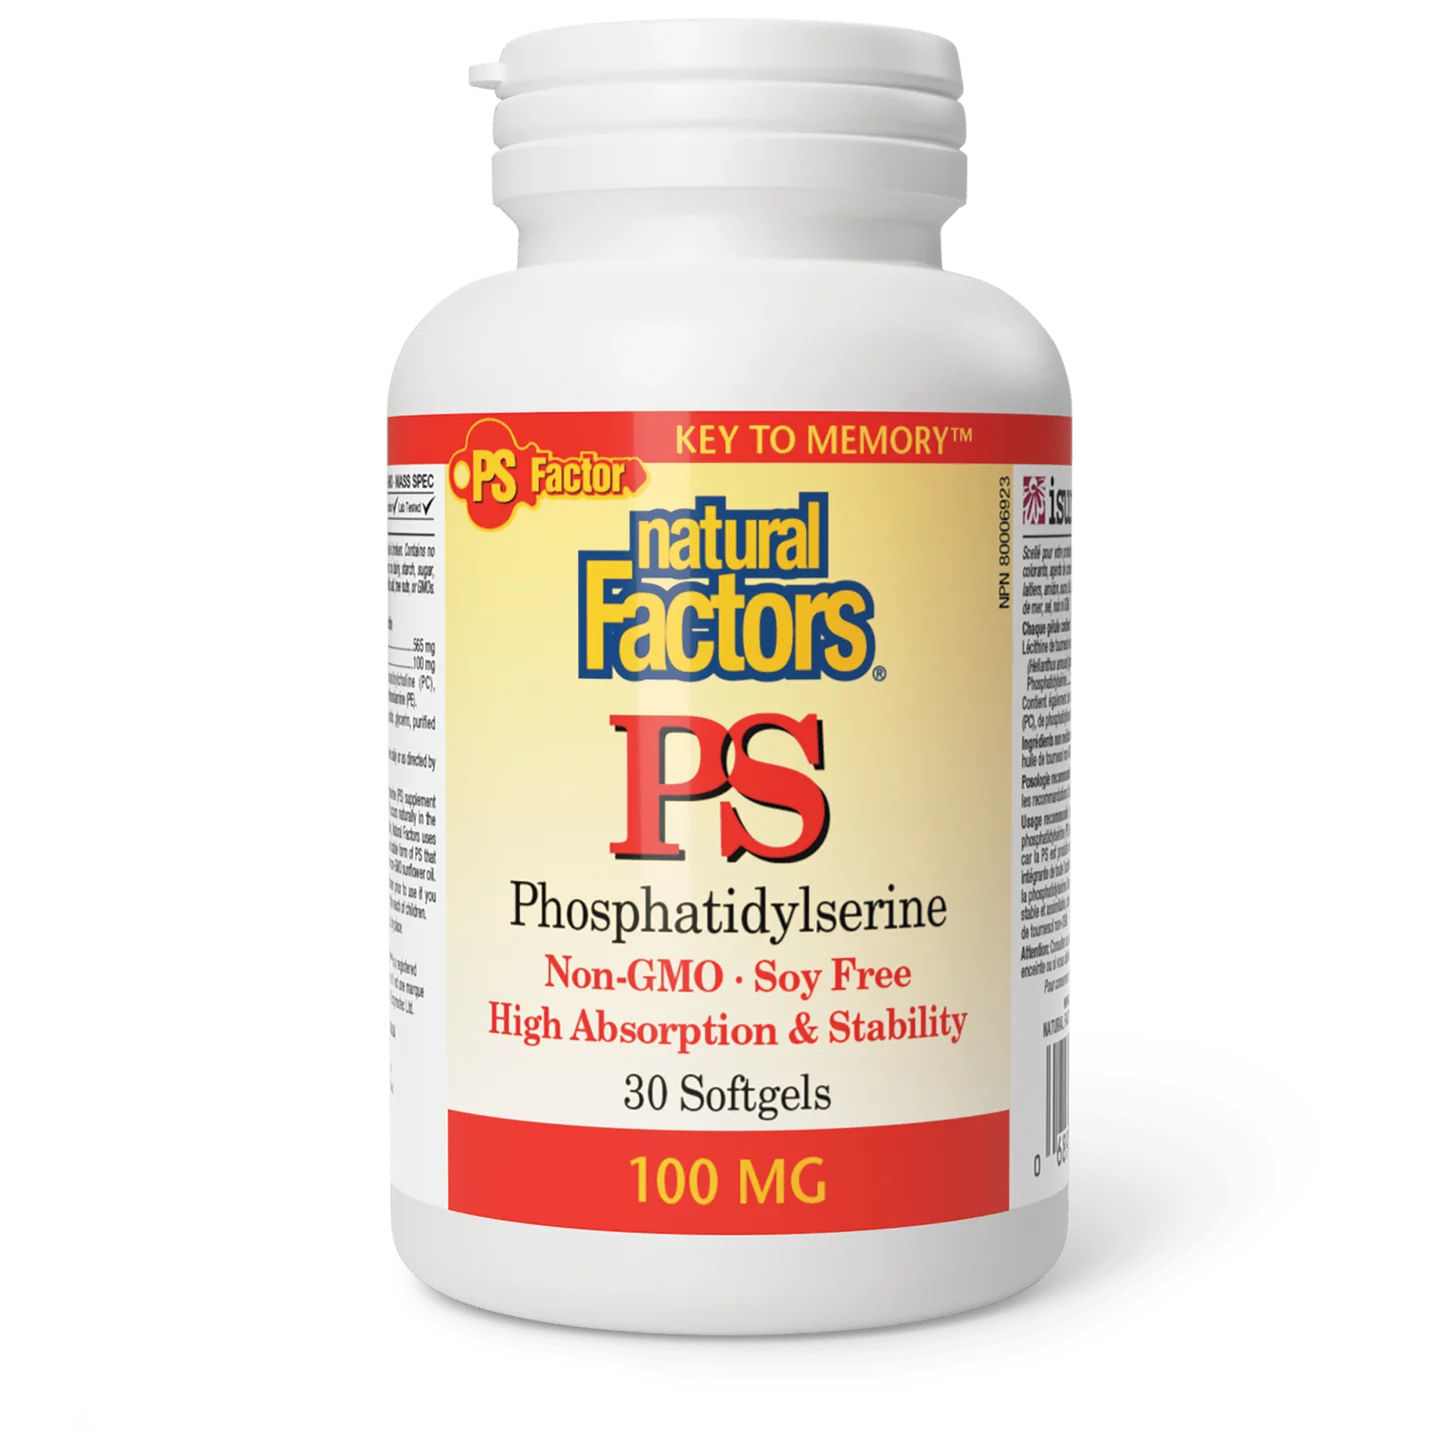 Natural Factors PS Phosphatidylserine 100 mg (30 softgels)